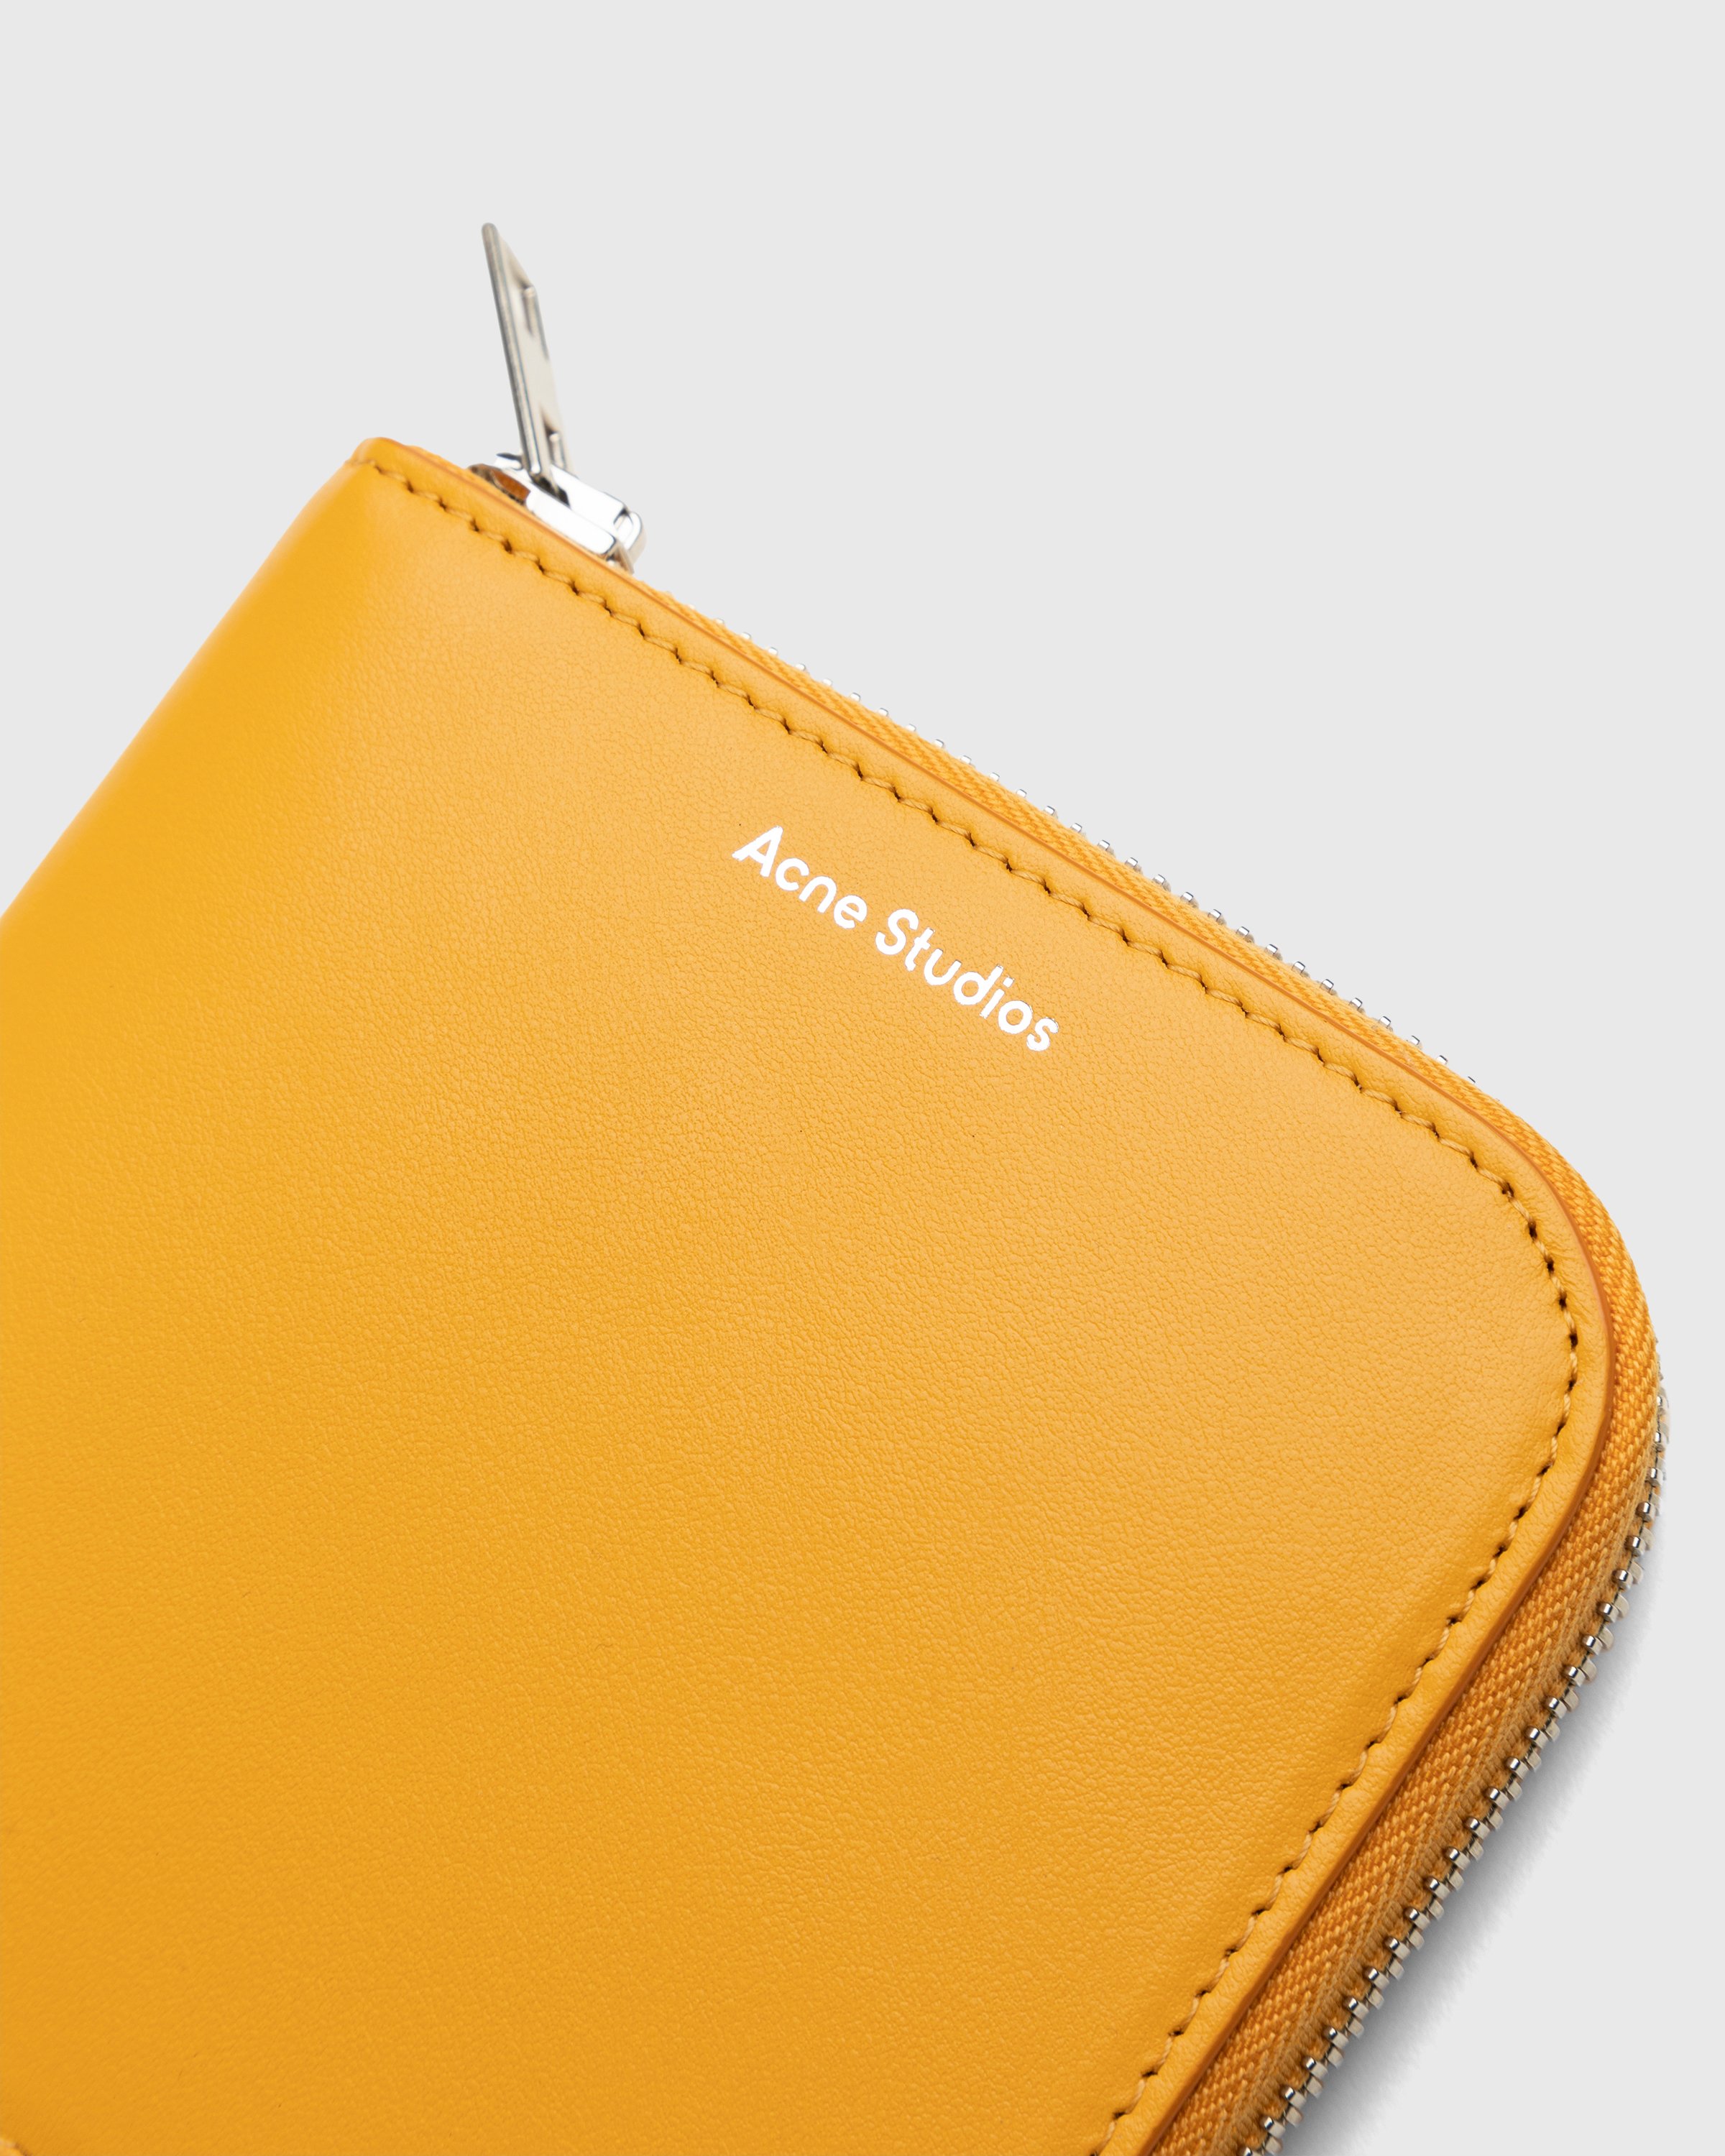 Acne Studios - Leather Zip Wallet Orange - Accessories - Orange - Image 3